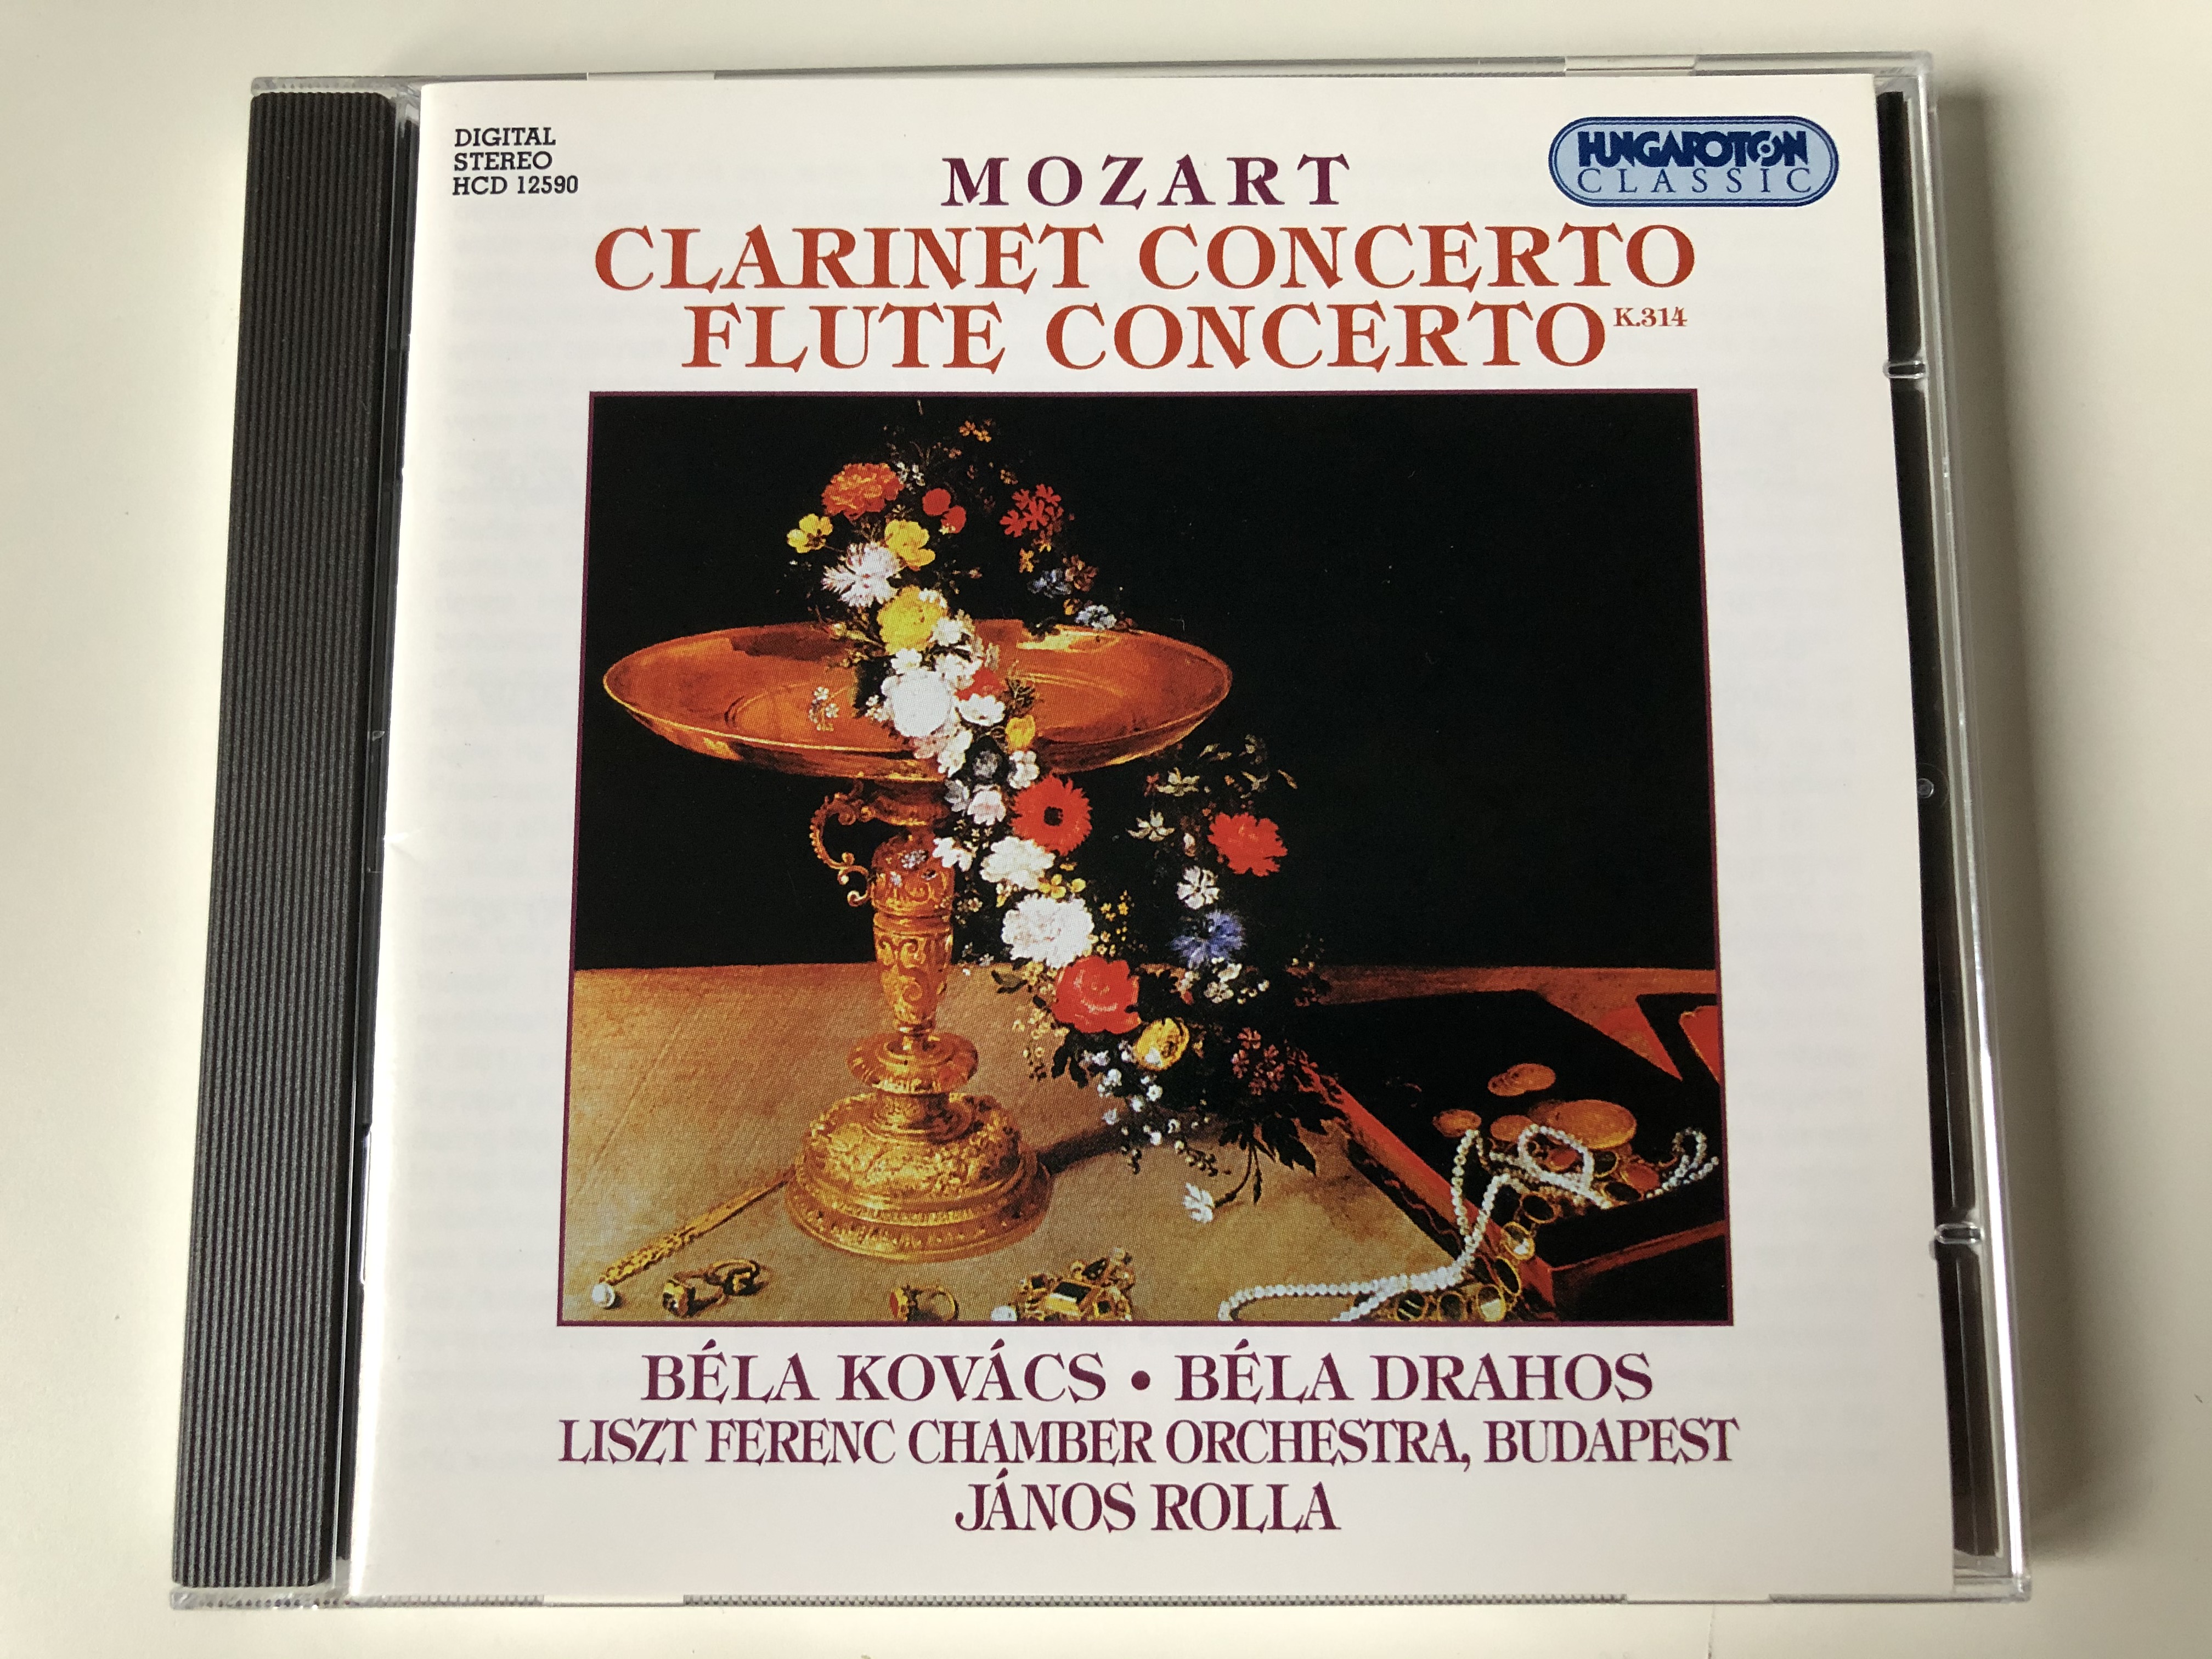 mozart-clarinet-concerto-flute-concerto-k-314-b-la-kov-cs-b-la-drahos-liszt-ferenc-chamber-orchestra-j-nos-rolla-hungaroton-classic-audio-cd-1995-stereo-hcd-12590-1-.jpg